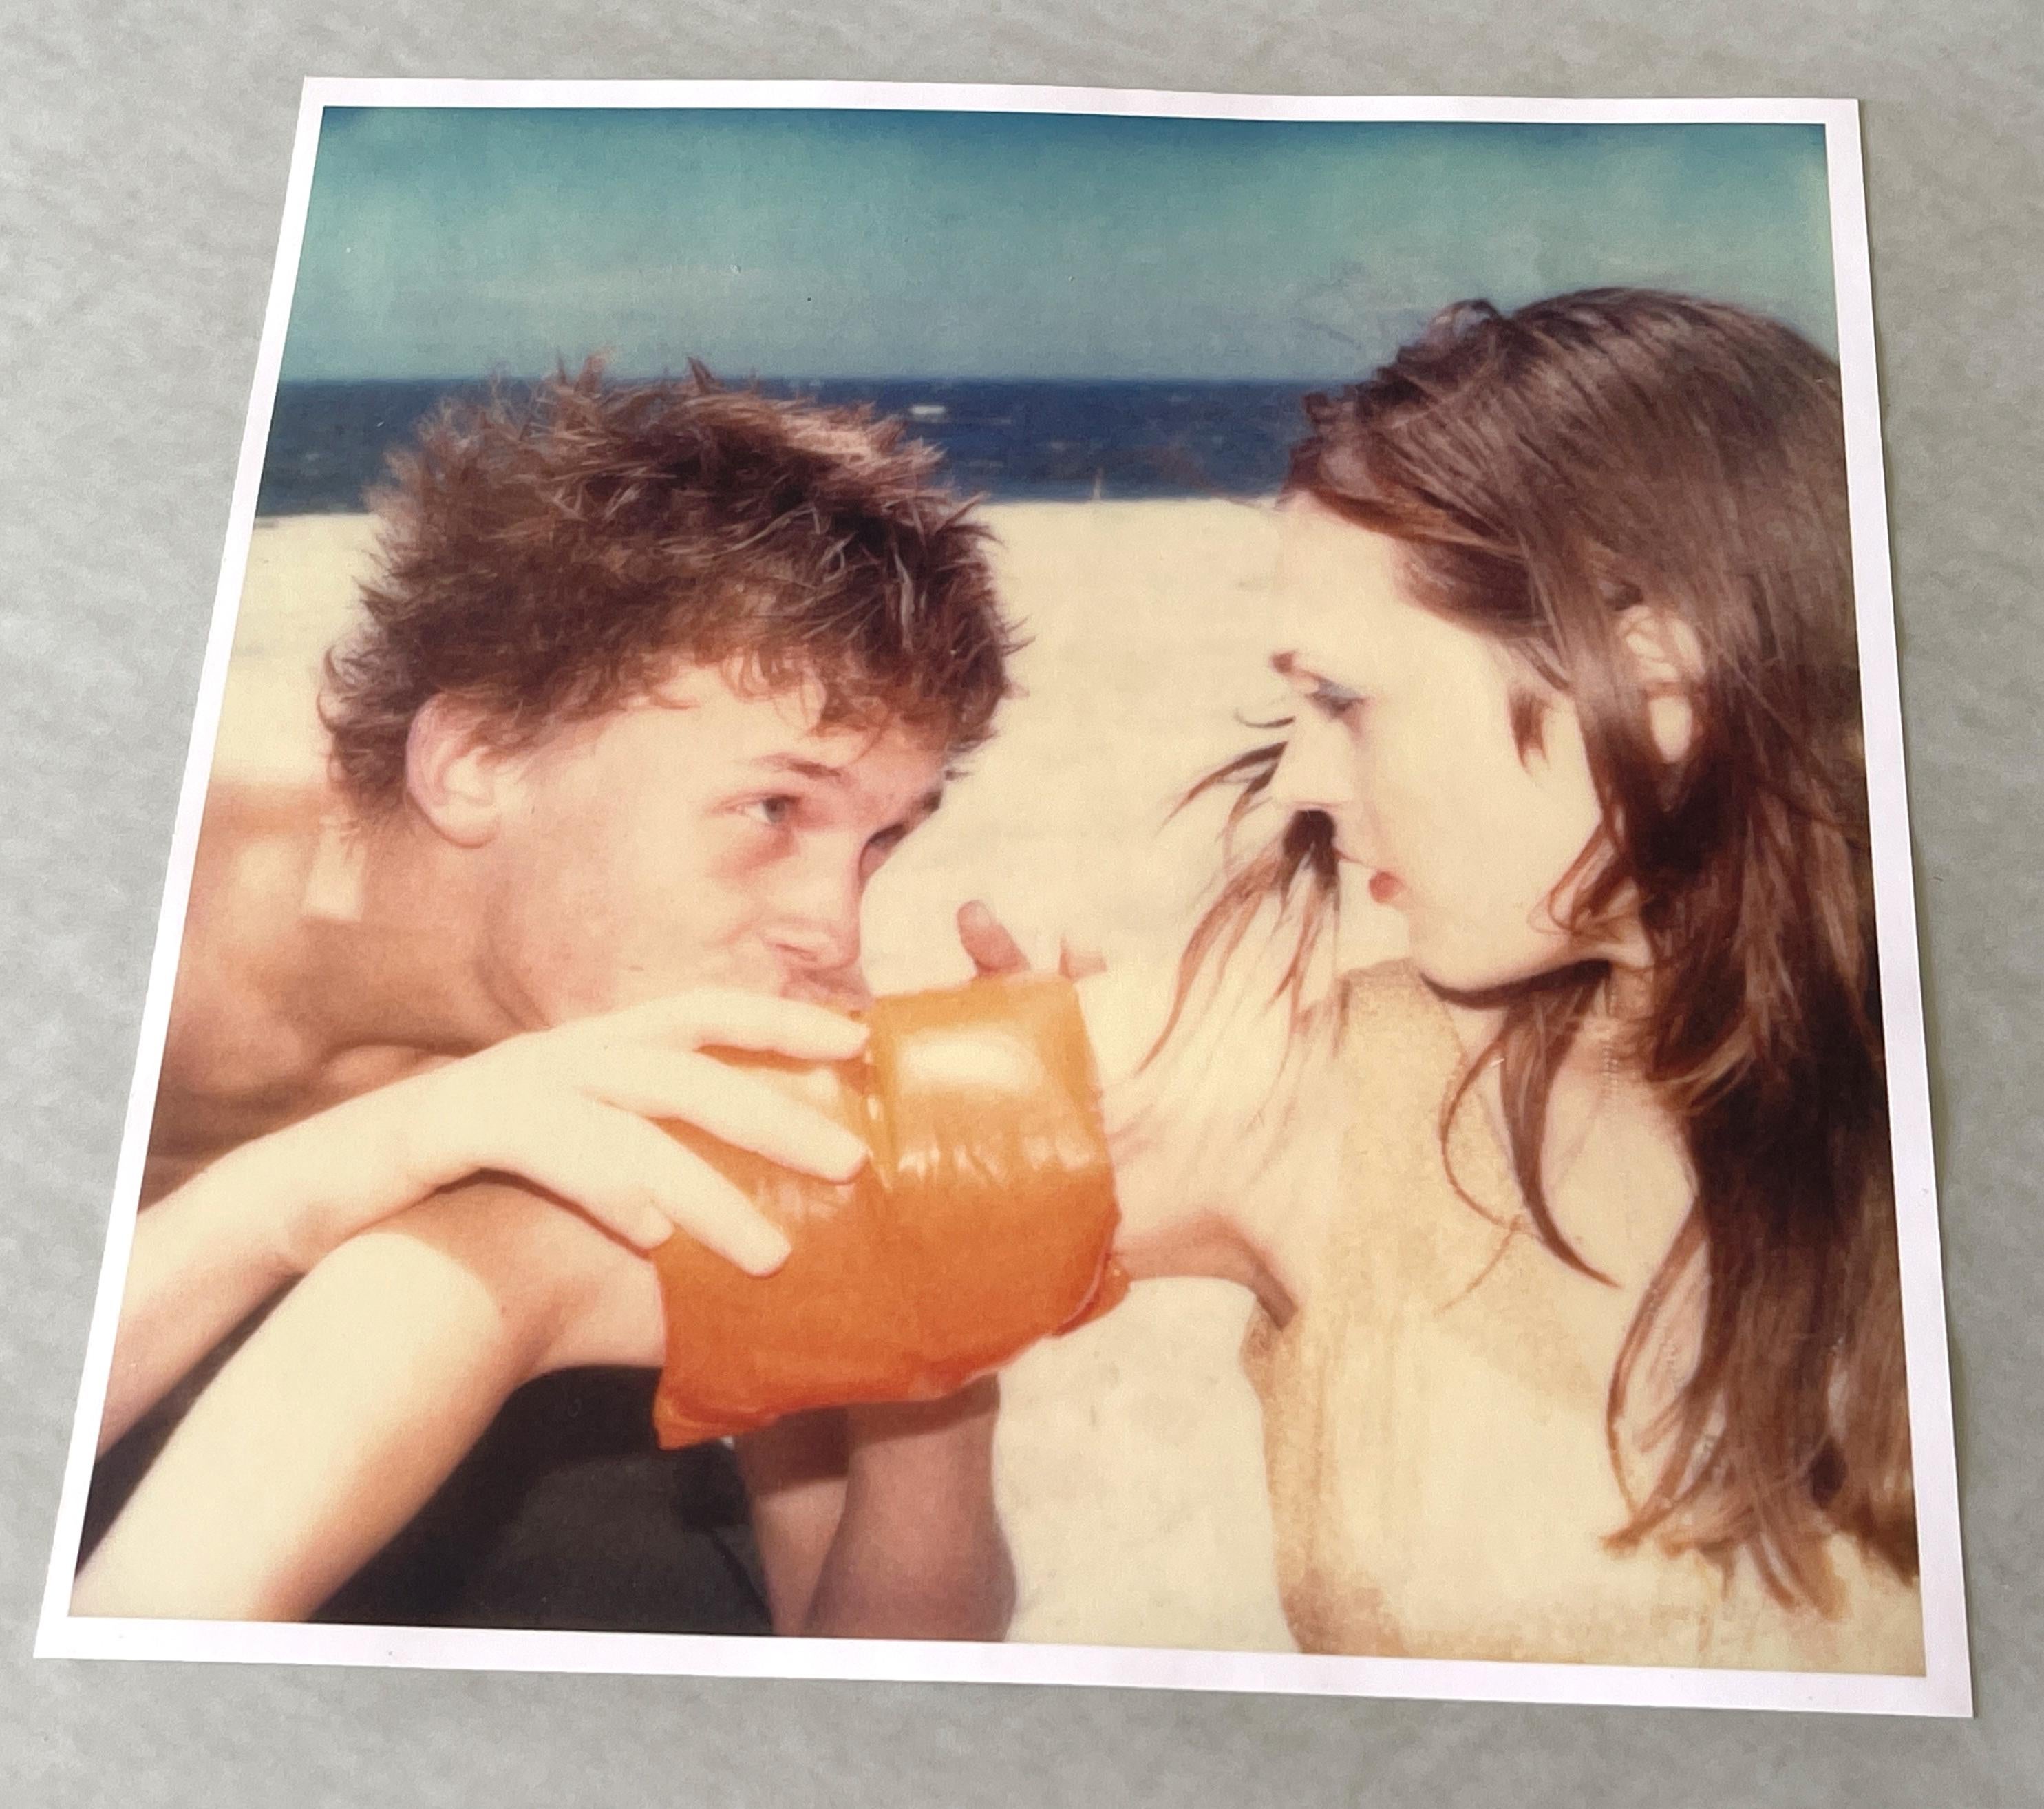 Floaties #3 (Beachshoot) - Polaroid, vintage, analogique, contemporain - Photograph de Stefanie Schneider